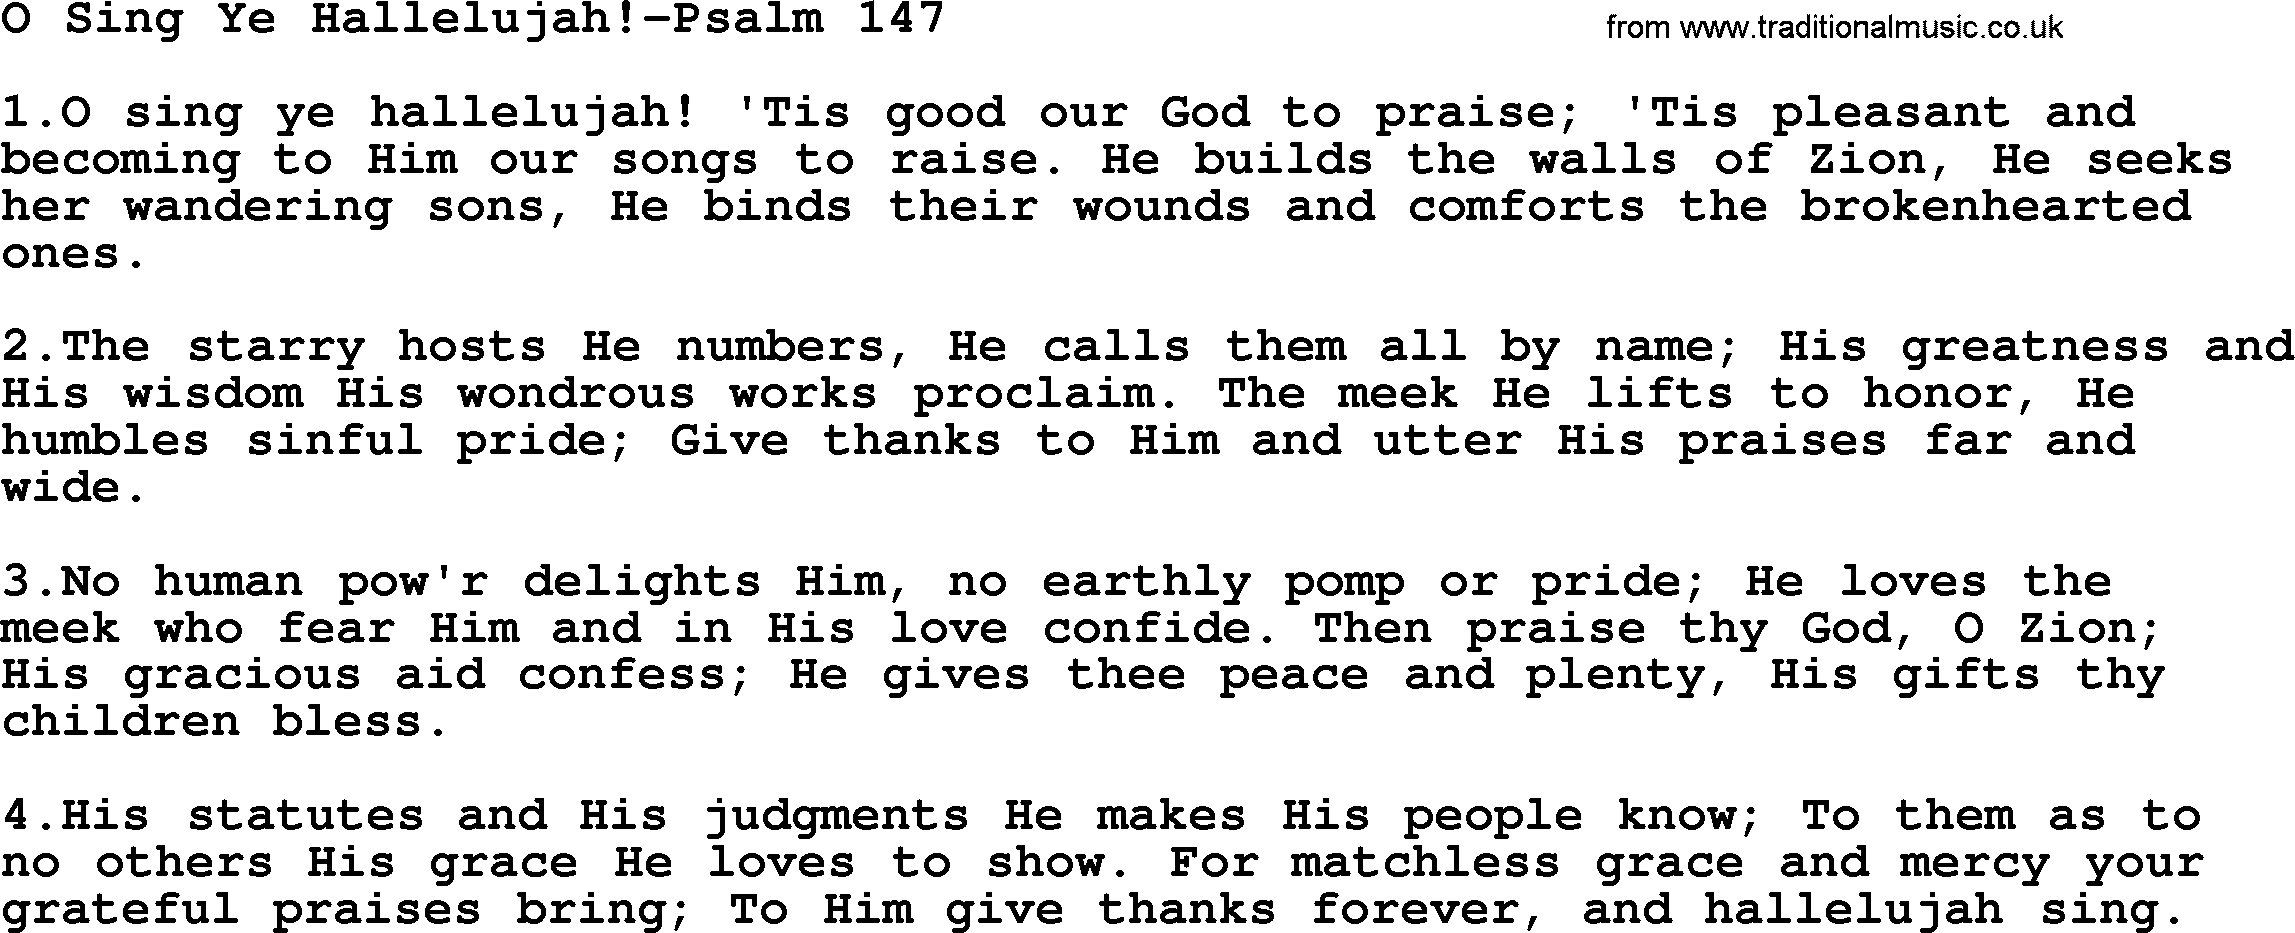 Hymns from the Psalms, Hymn: O Sing Ye Hallelujah!-Psalm 147, lyrics with PDF